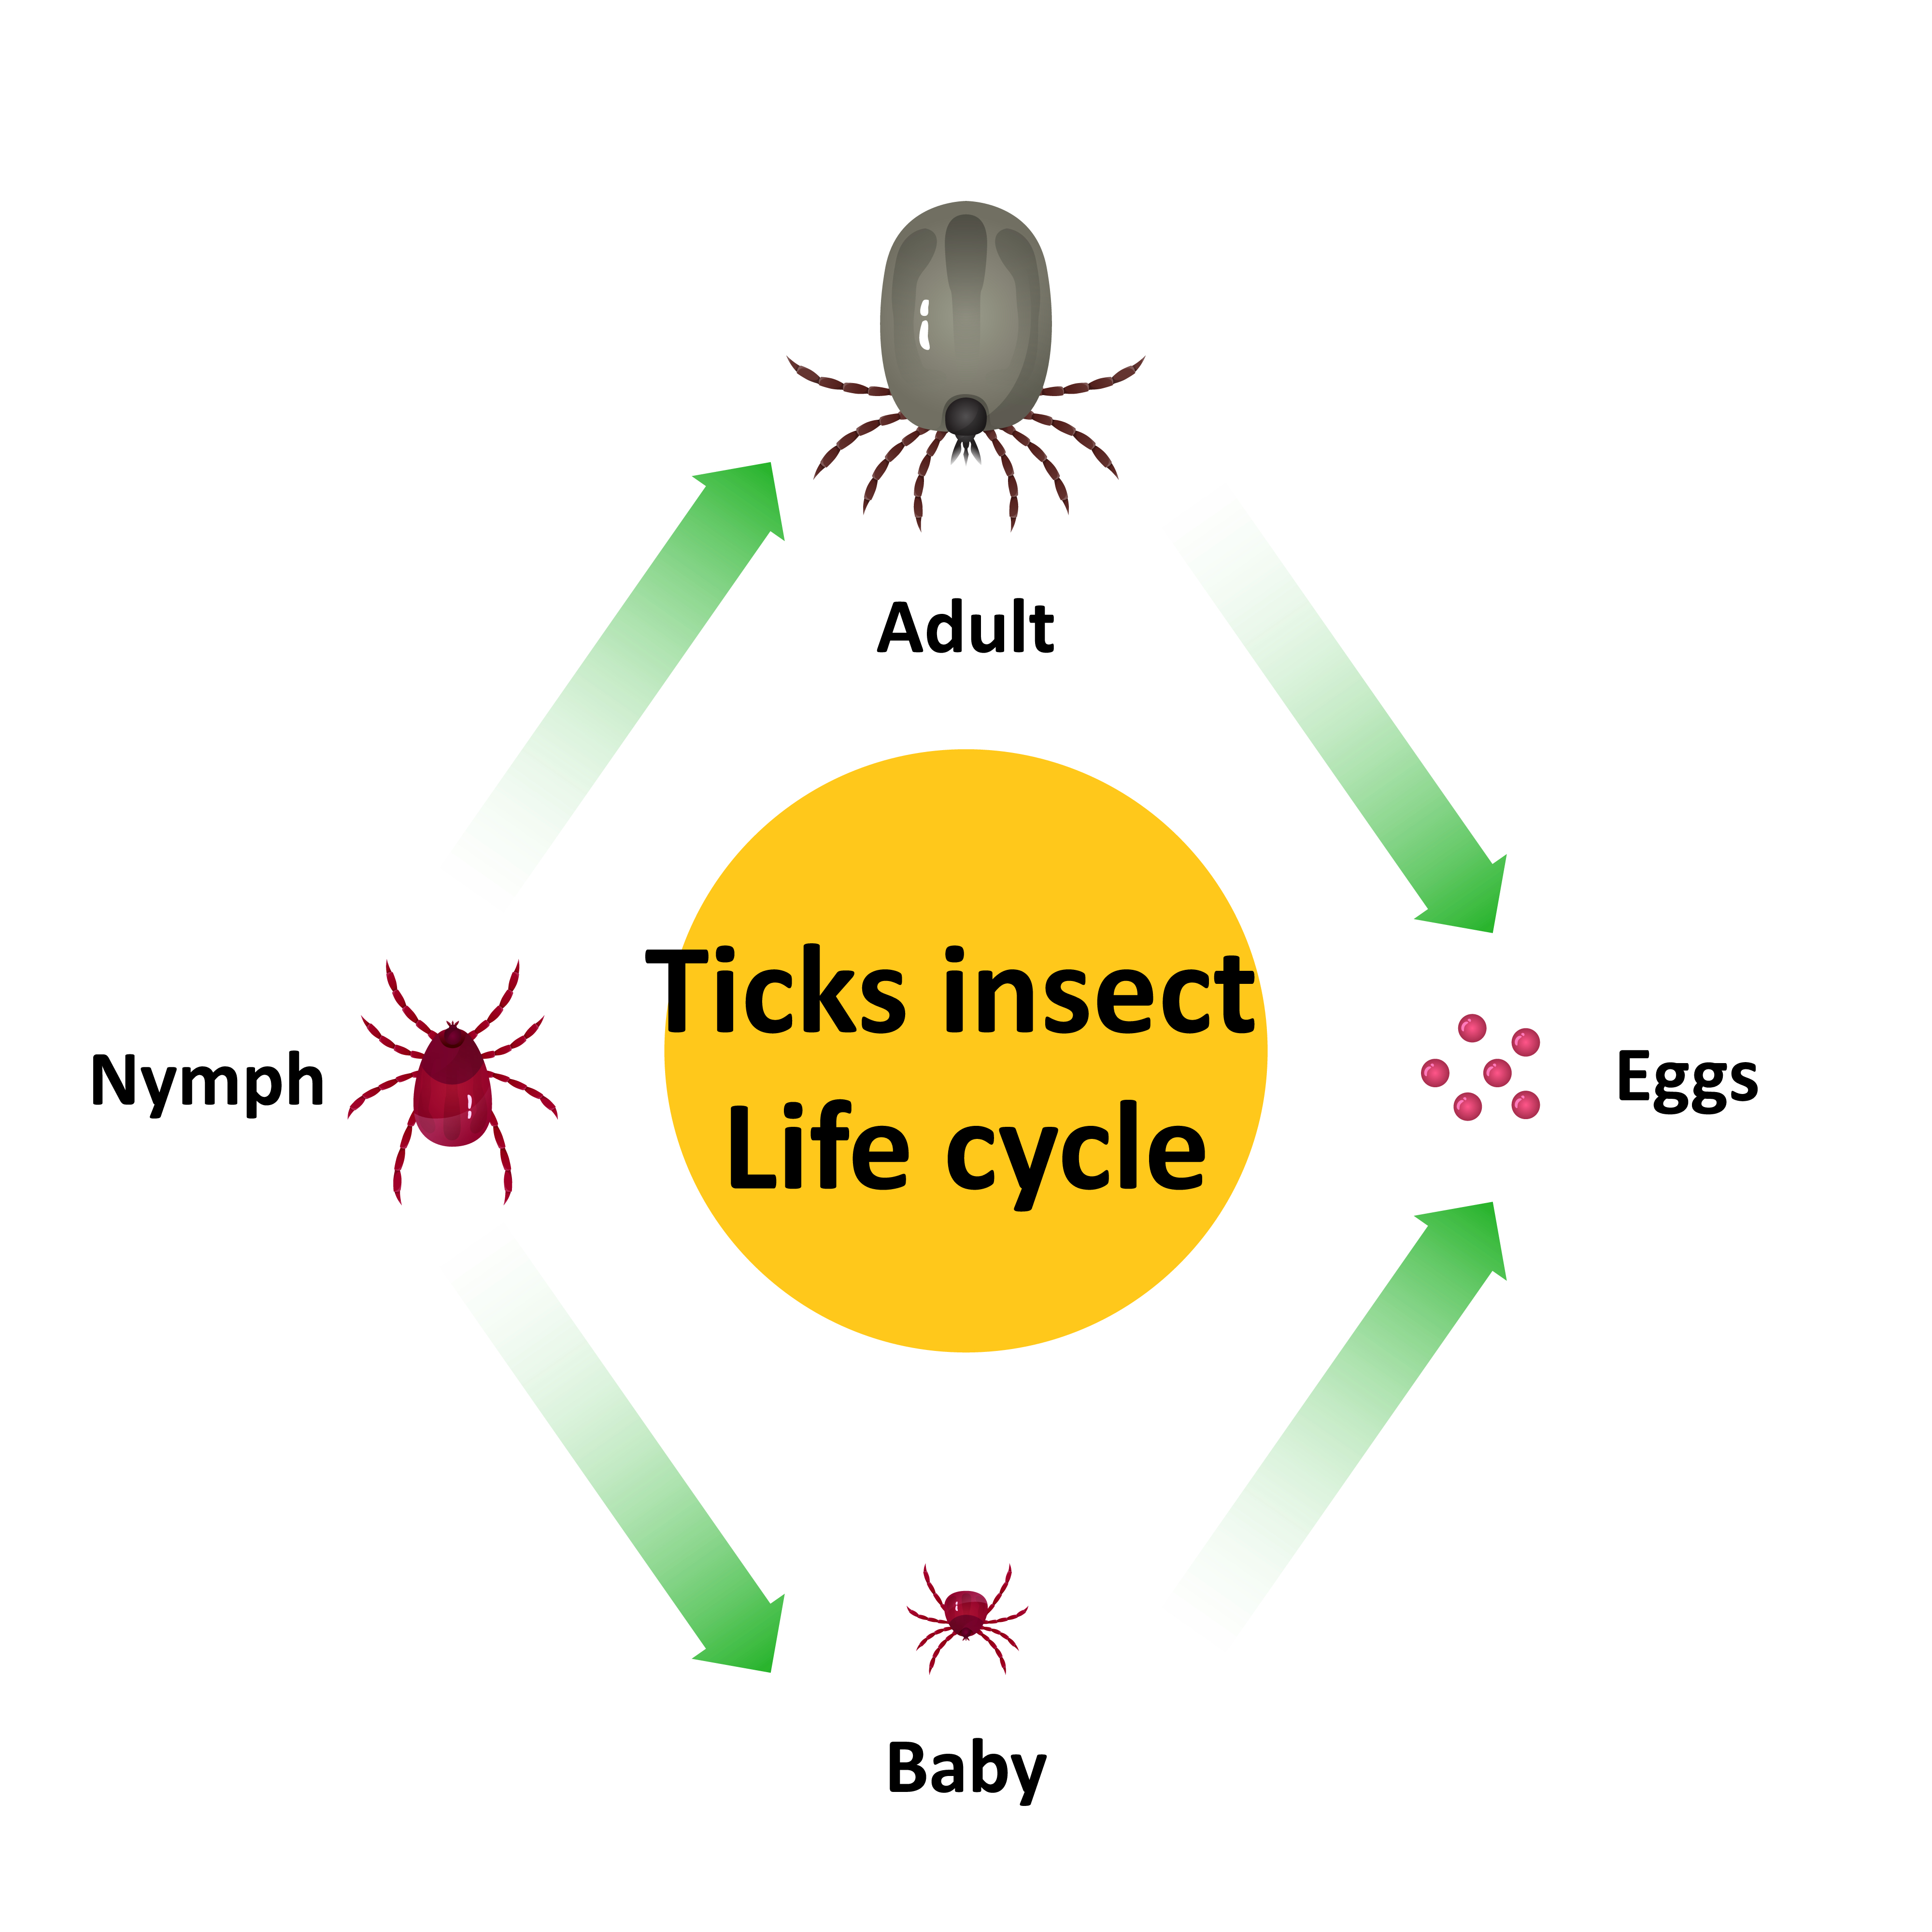 How to prevent tick bites on my pet